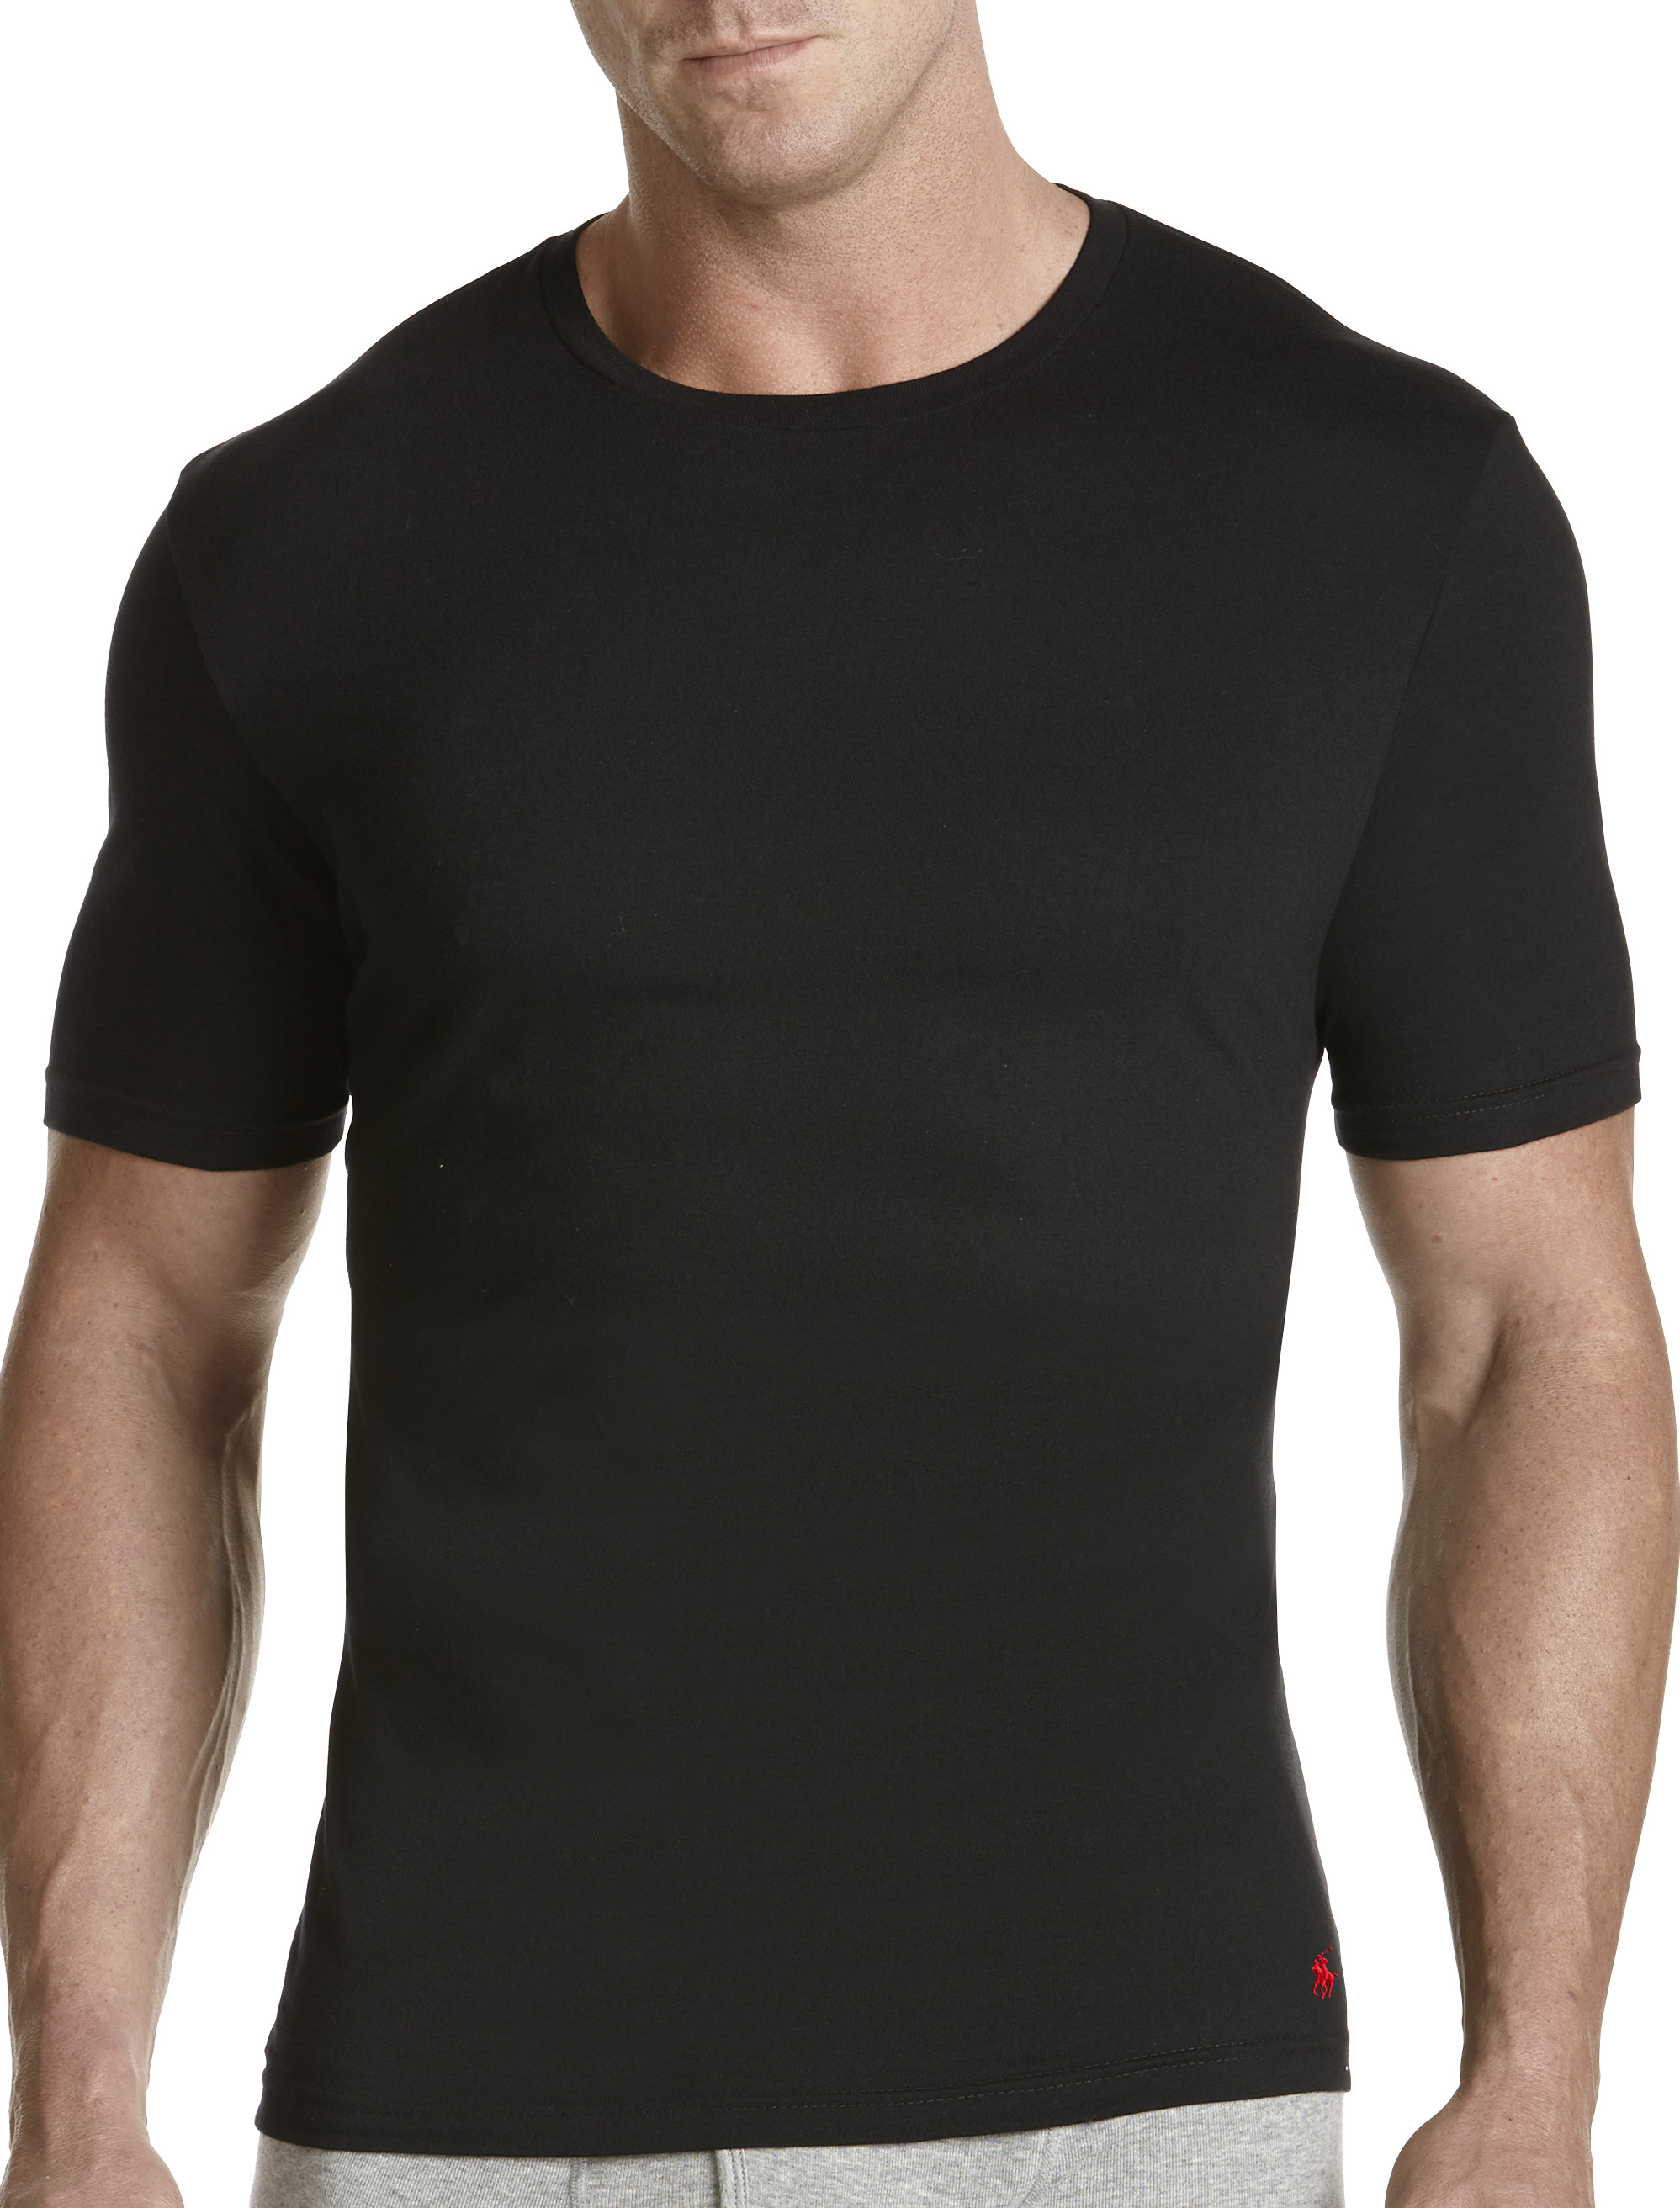 Harbor Bay by DXL Big and Tall Men's Shapewear V-Neck T-Shirt, Black, 5XL 